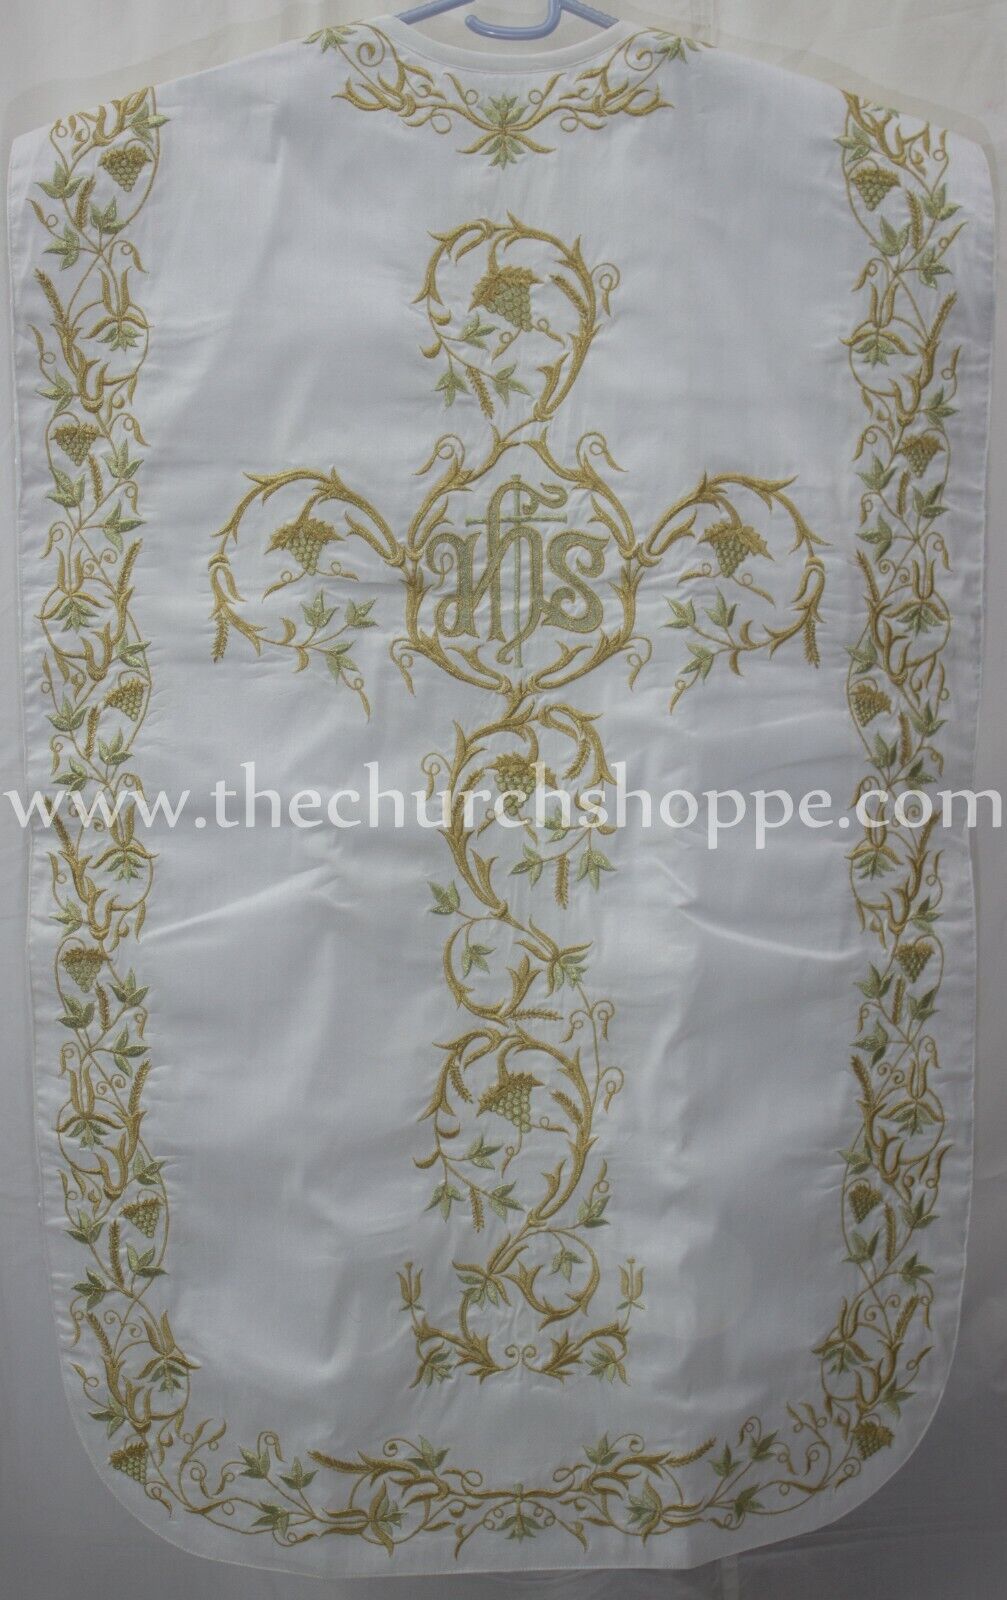 WHITE Roman Chasuble Fiddleback Vestment & 5 piece mass set IHS embroidery,FELT 